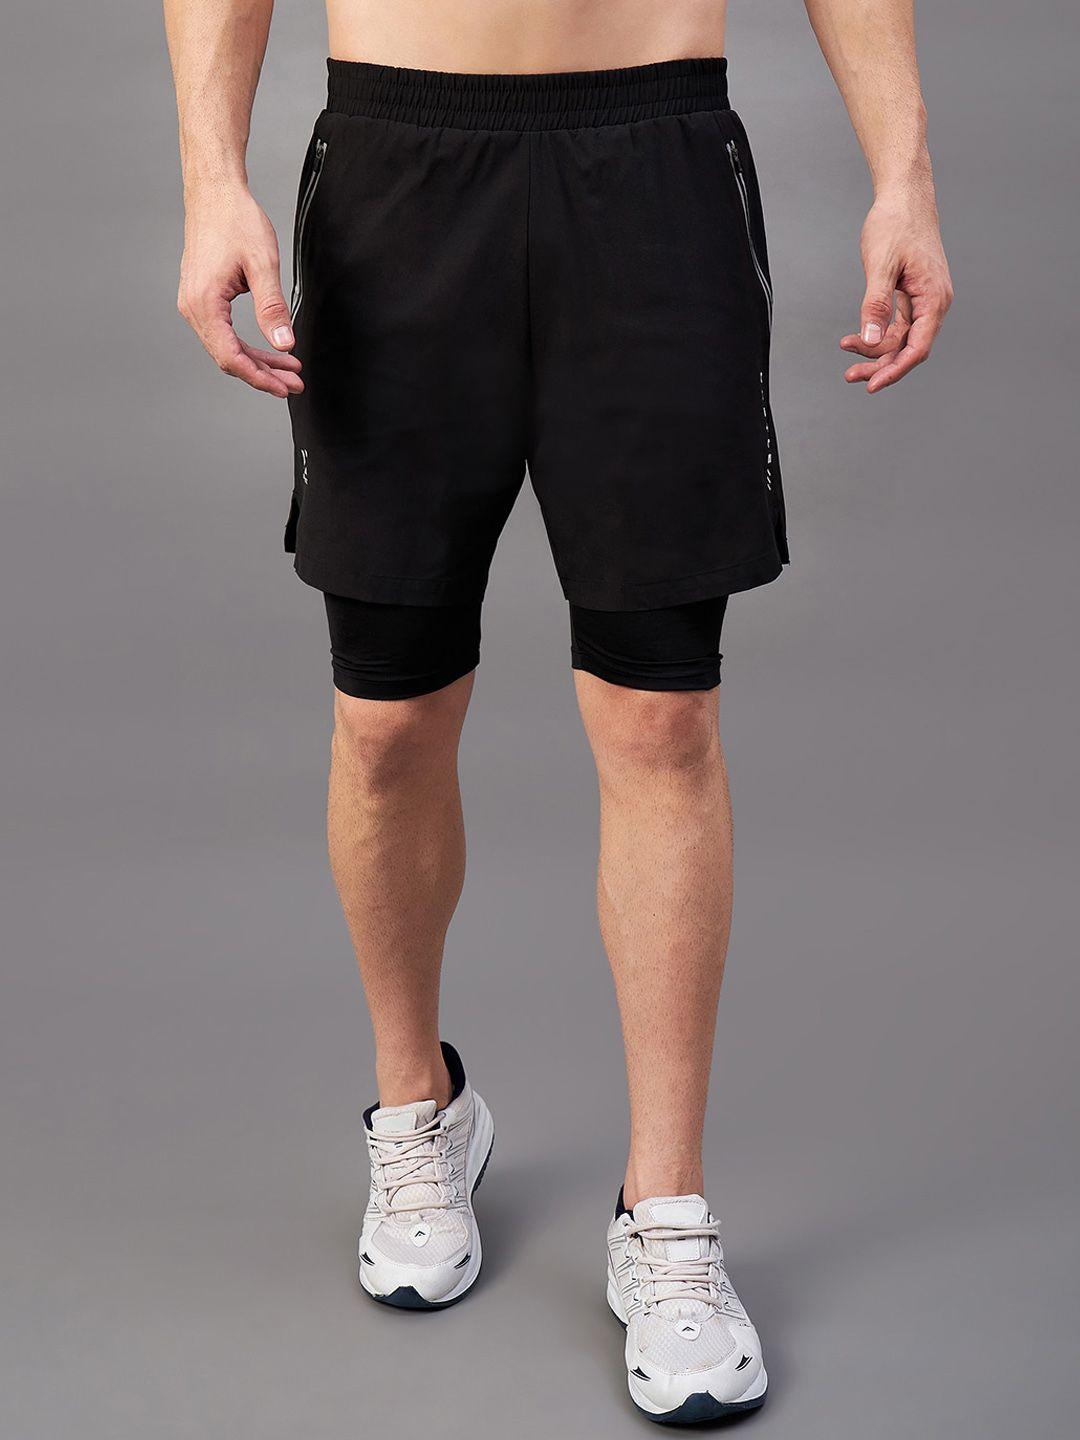 masch-sports-men-mid-rise-rapid-dry-sports-shorts